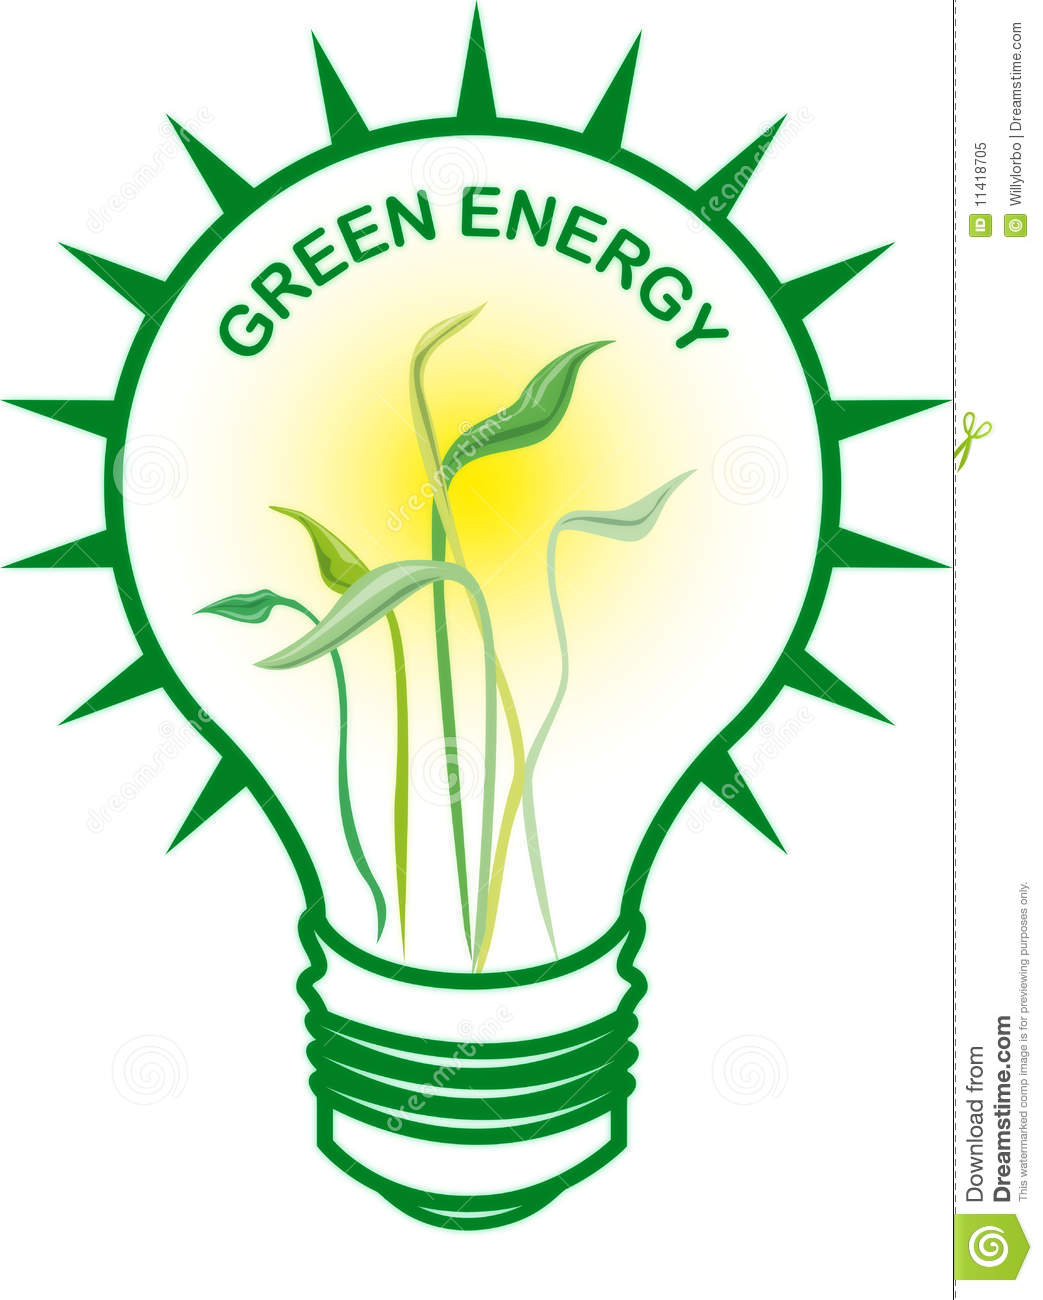 Green Energy Bulb Royalty Free Stock Photo   Image  11418705